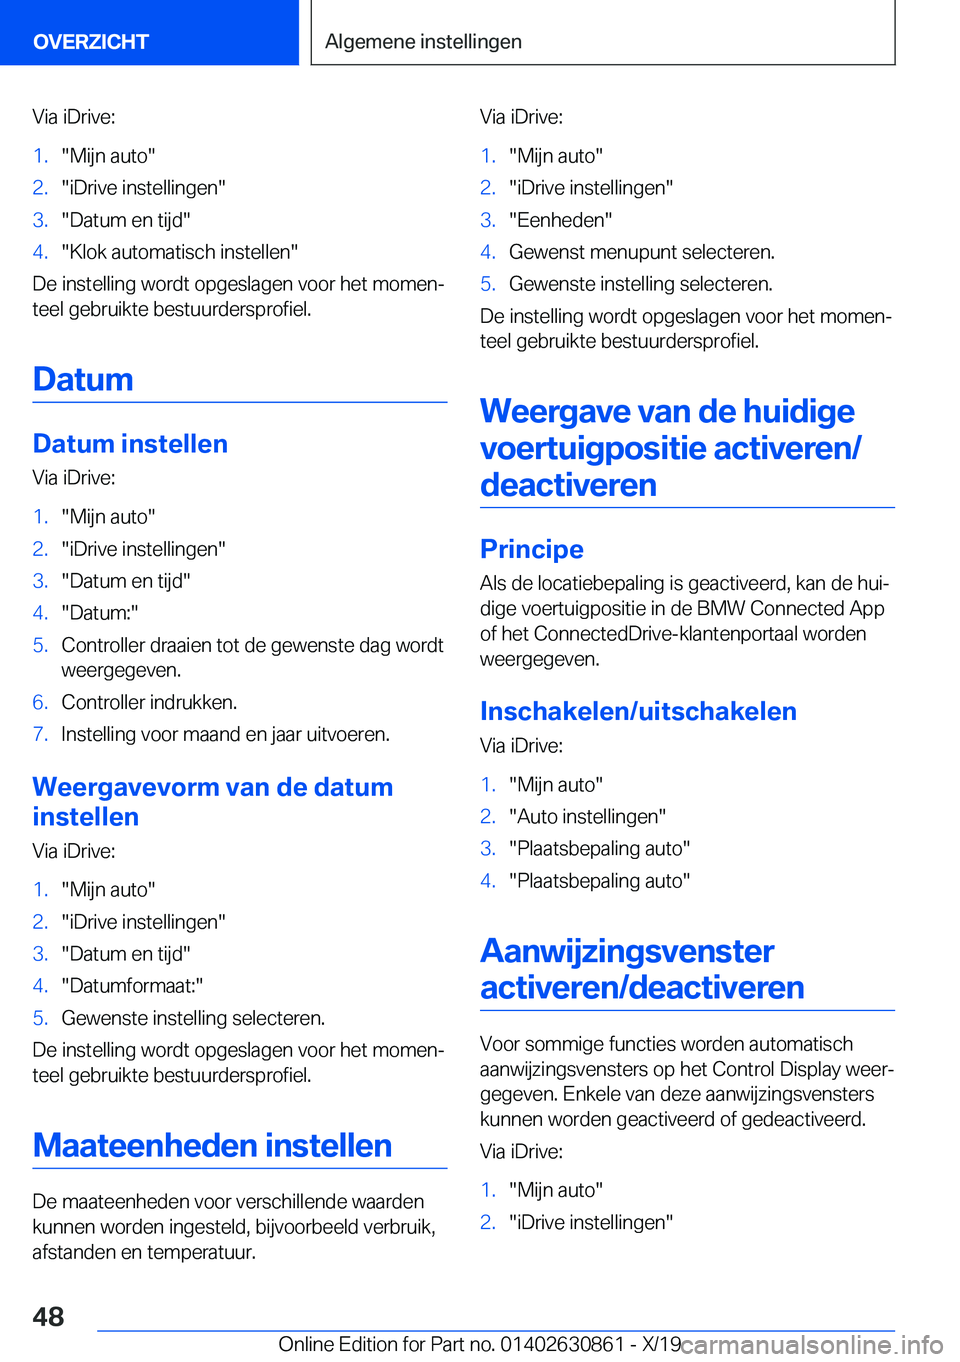 BMW 4 SERIES GRAN COUPE 2020  Instructieboekjes (in Dutch) �V�i�a��i�D�r�i�v�e�:�1�.��M�i�j�n��a�u�t�o��2�.��i�D�r�i�v�e��i�n�s�t�e�l�l�i�n�g�e�n��3�.��D�a�t�u�m��e�n��t�i�j�d��4�.��K�l�o�k��a�u�t�o�m�a�t�i�s�c�h��i�n�s�t�e�l�l�e�n�
�D�e��i�n�